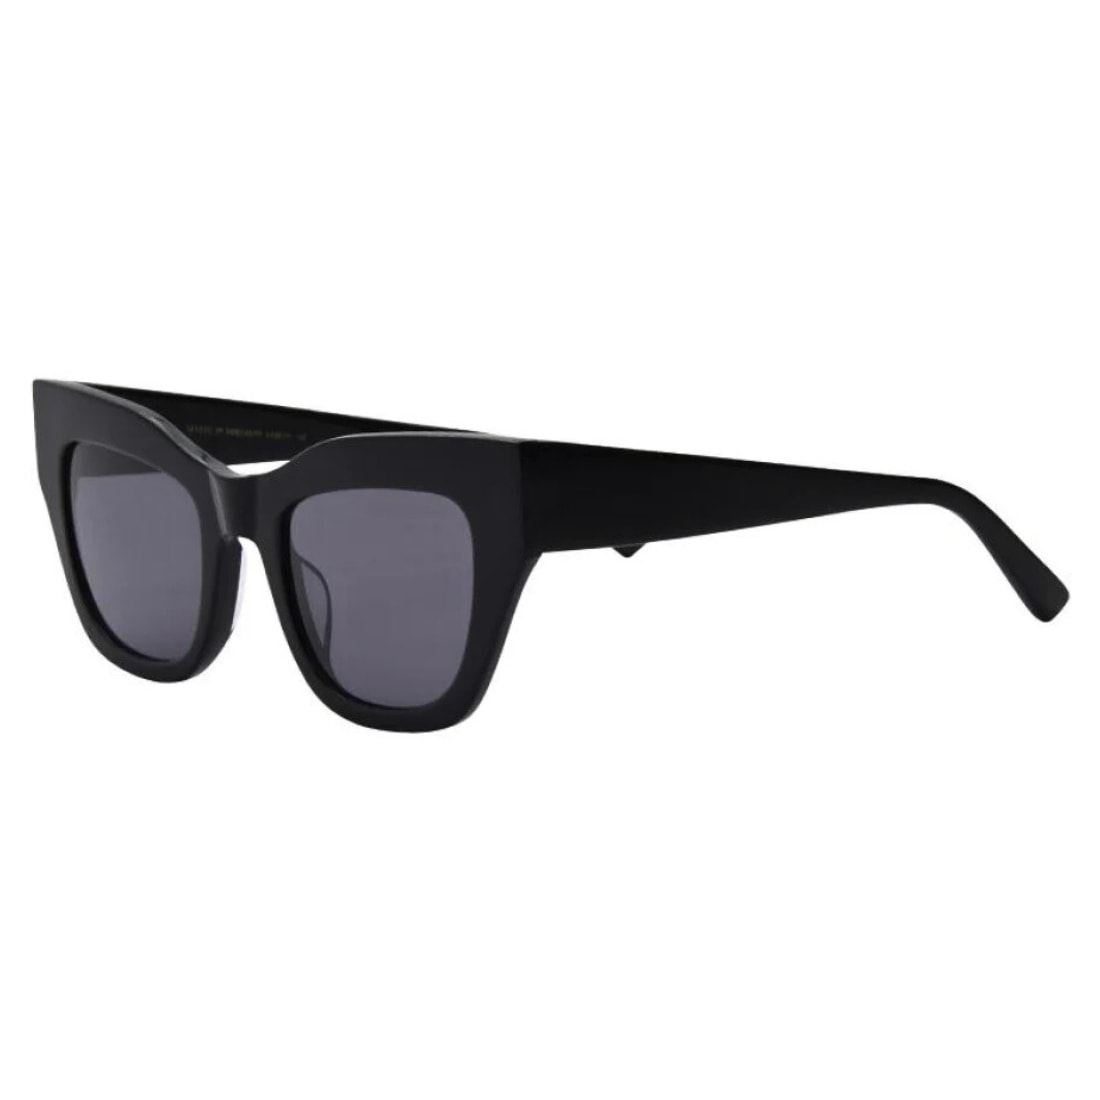 I-Sea Decker Cat Eye Polarised Sunglasses - Black/Smoke Polarized Lens - Cat Eye Sunglasses by I-Sea